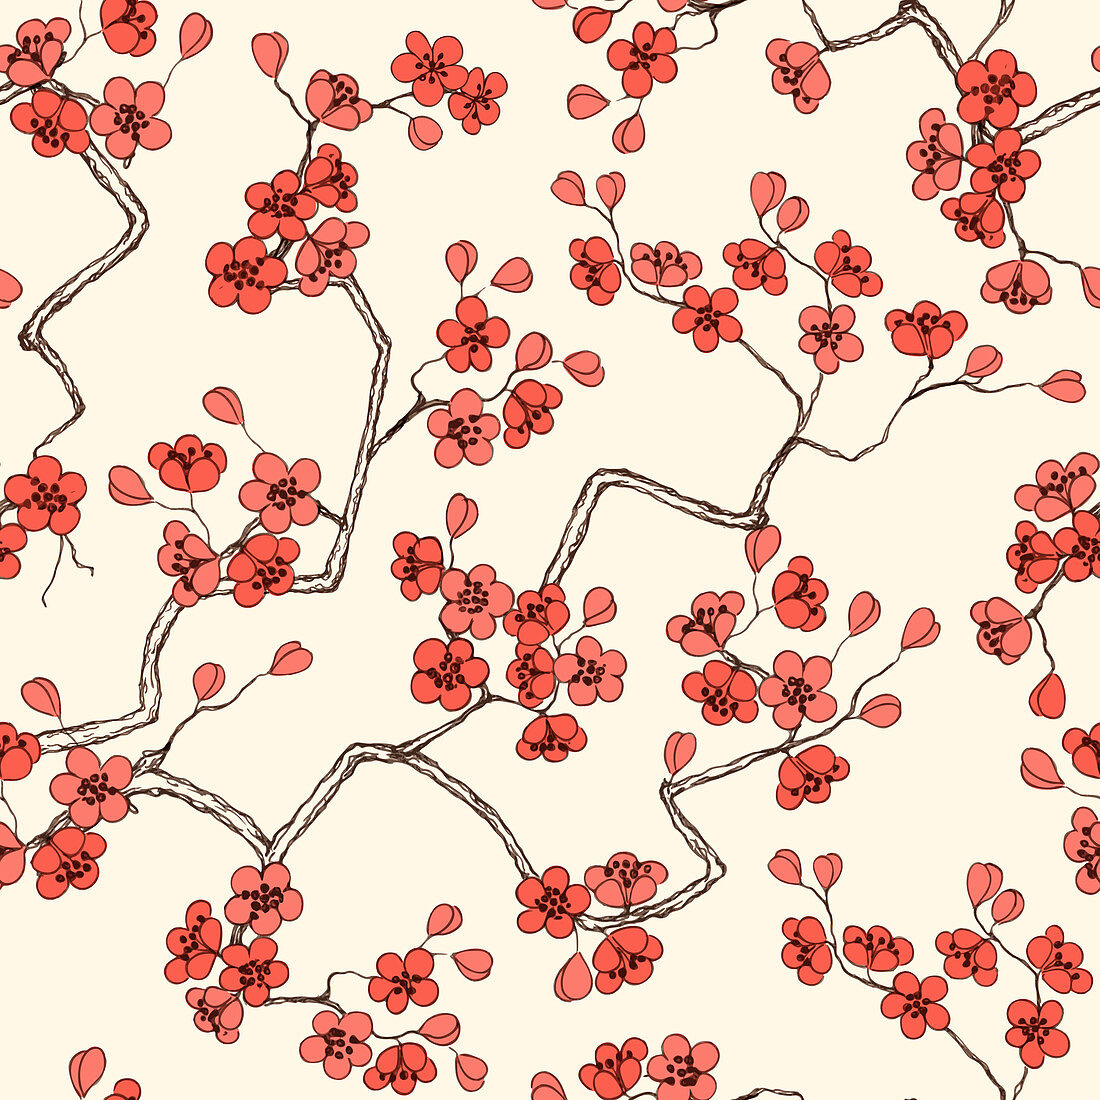 Cherry blossom, illustration